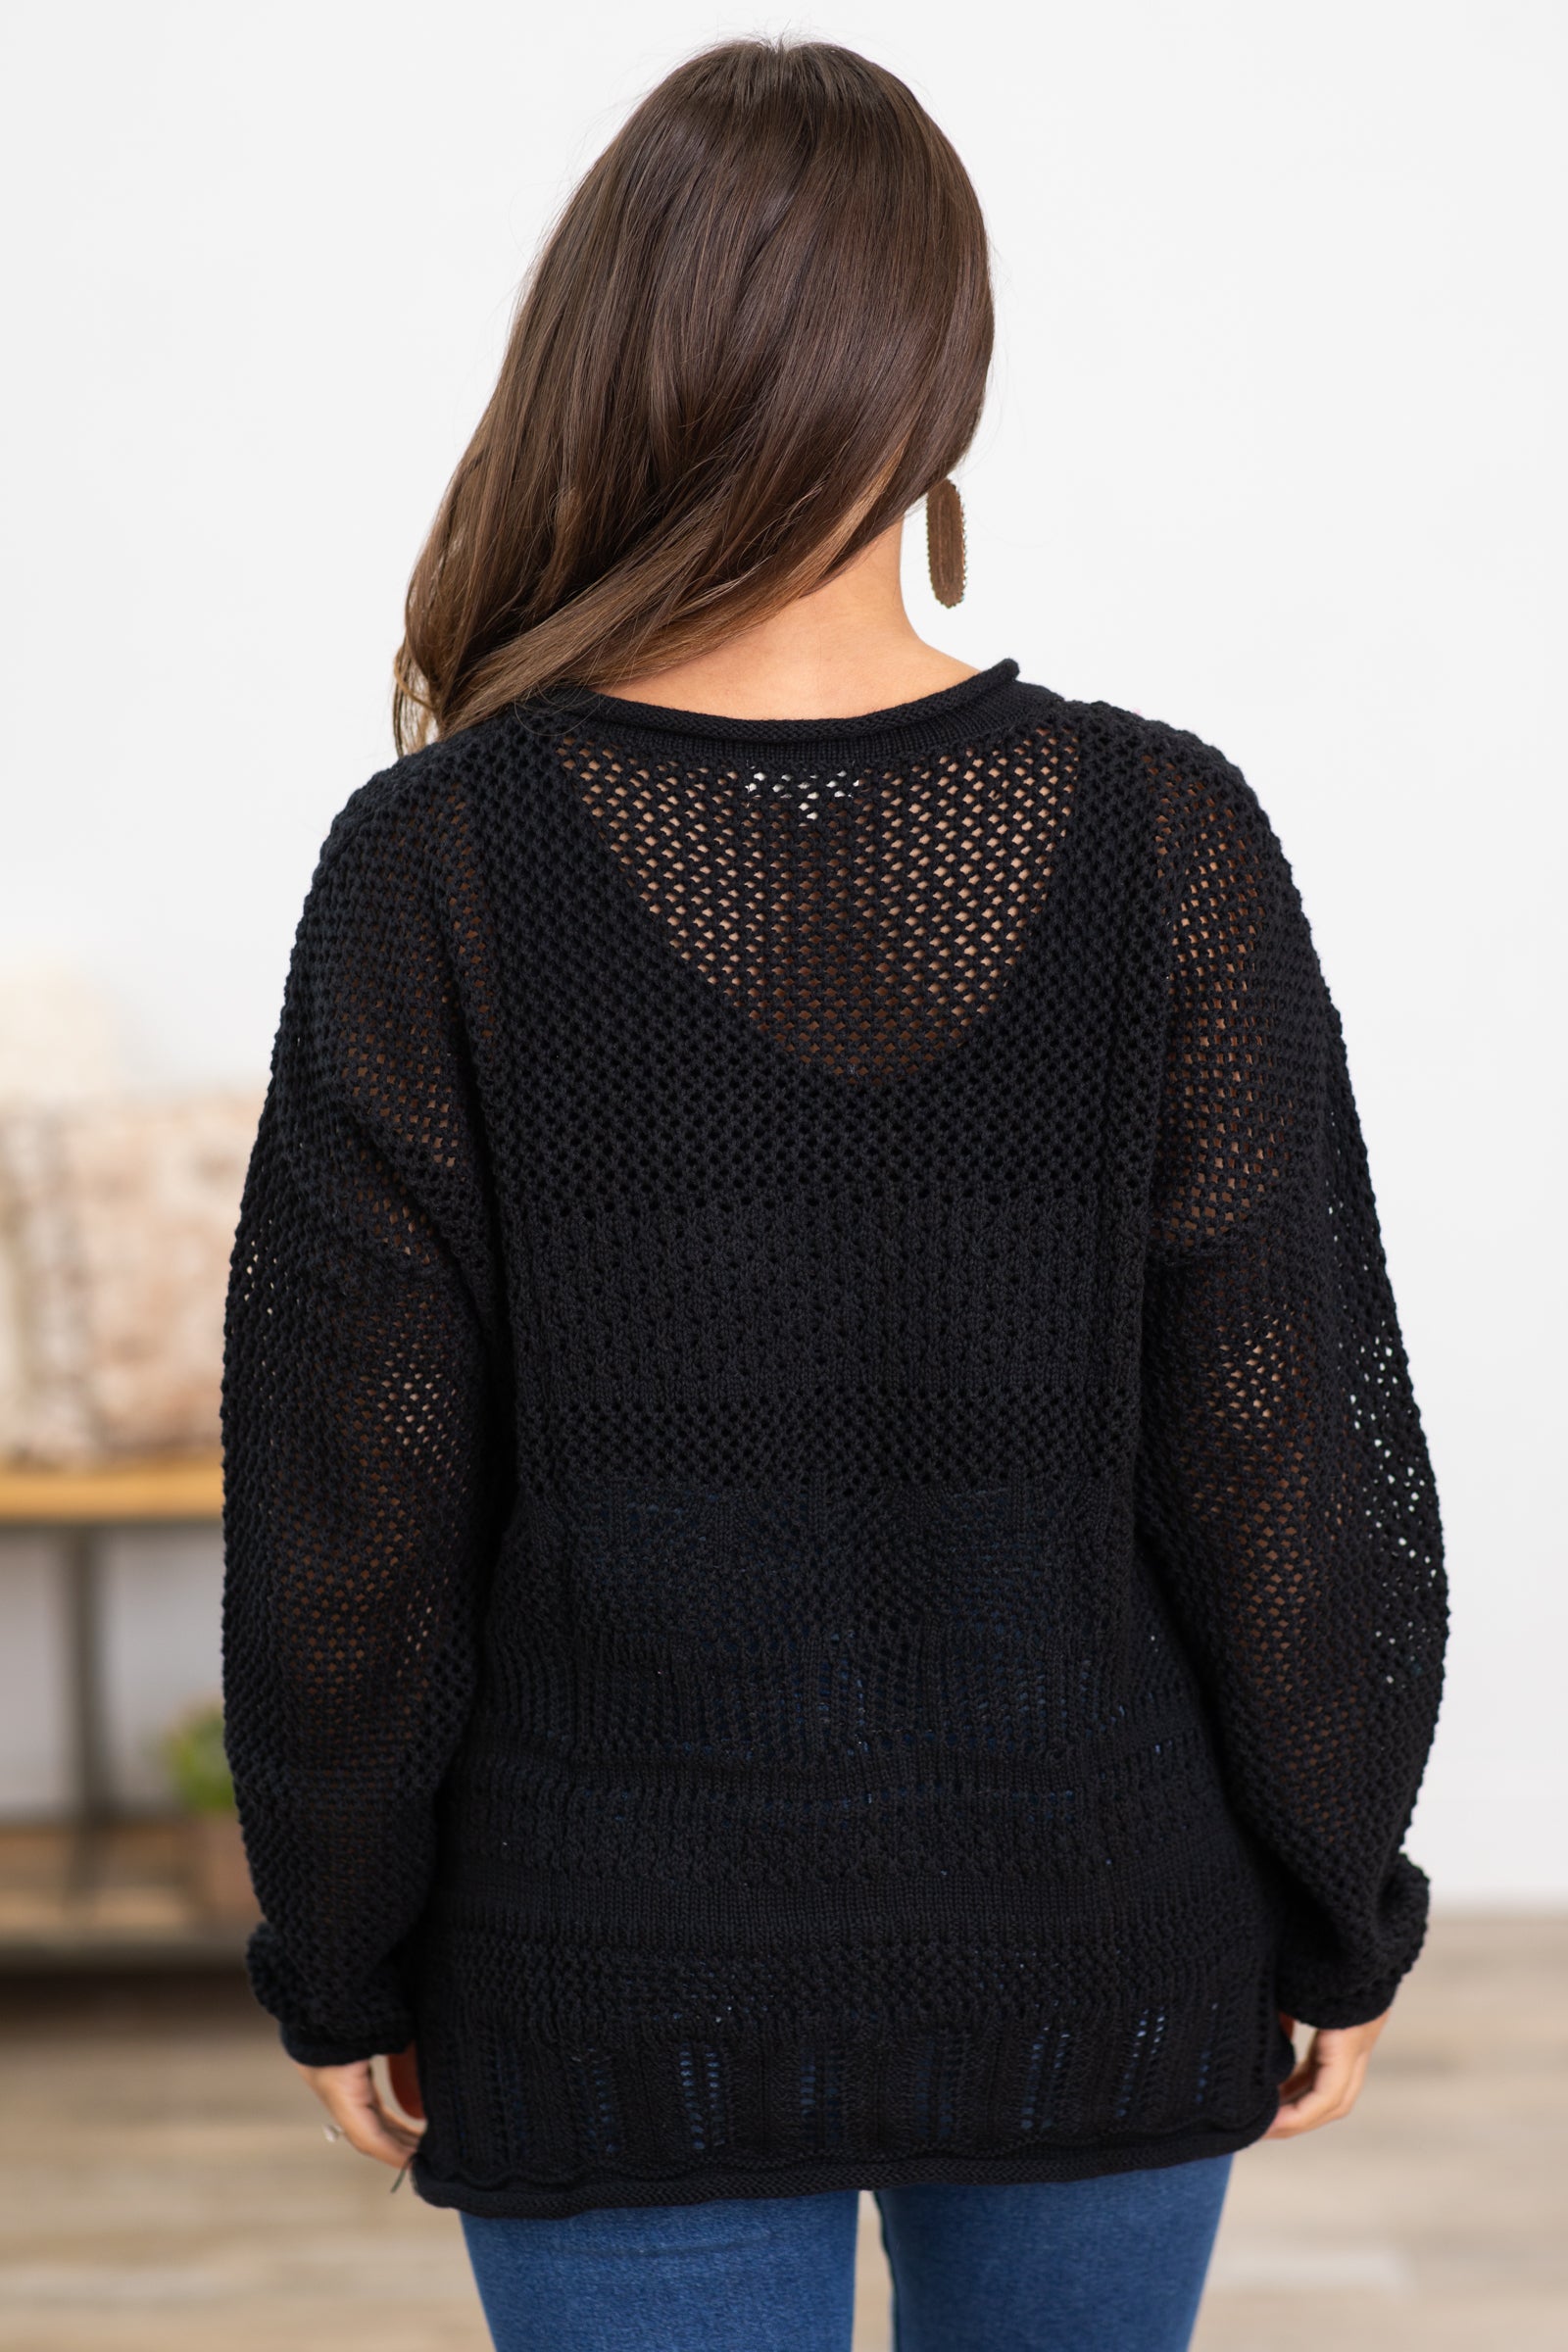 Black Fishnet Lightweight Sweater